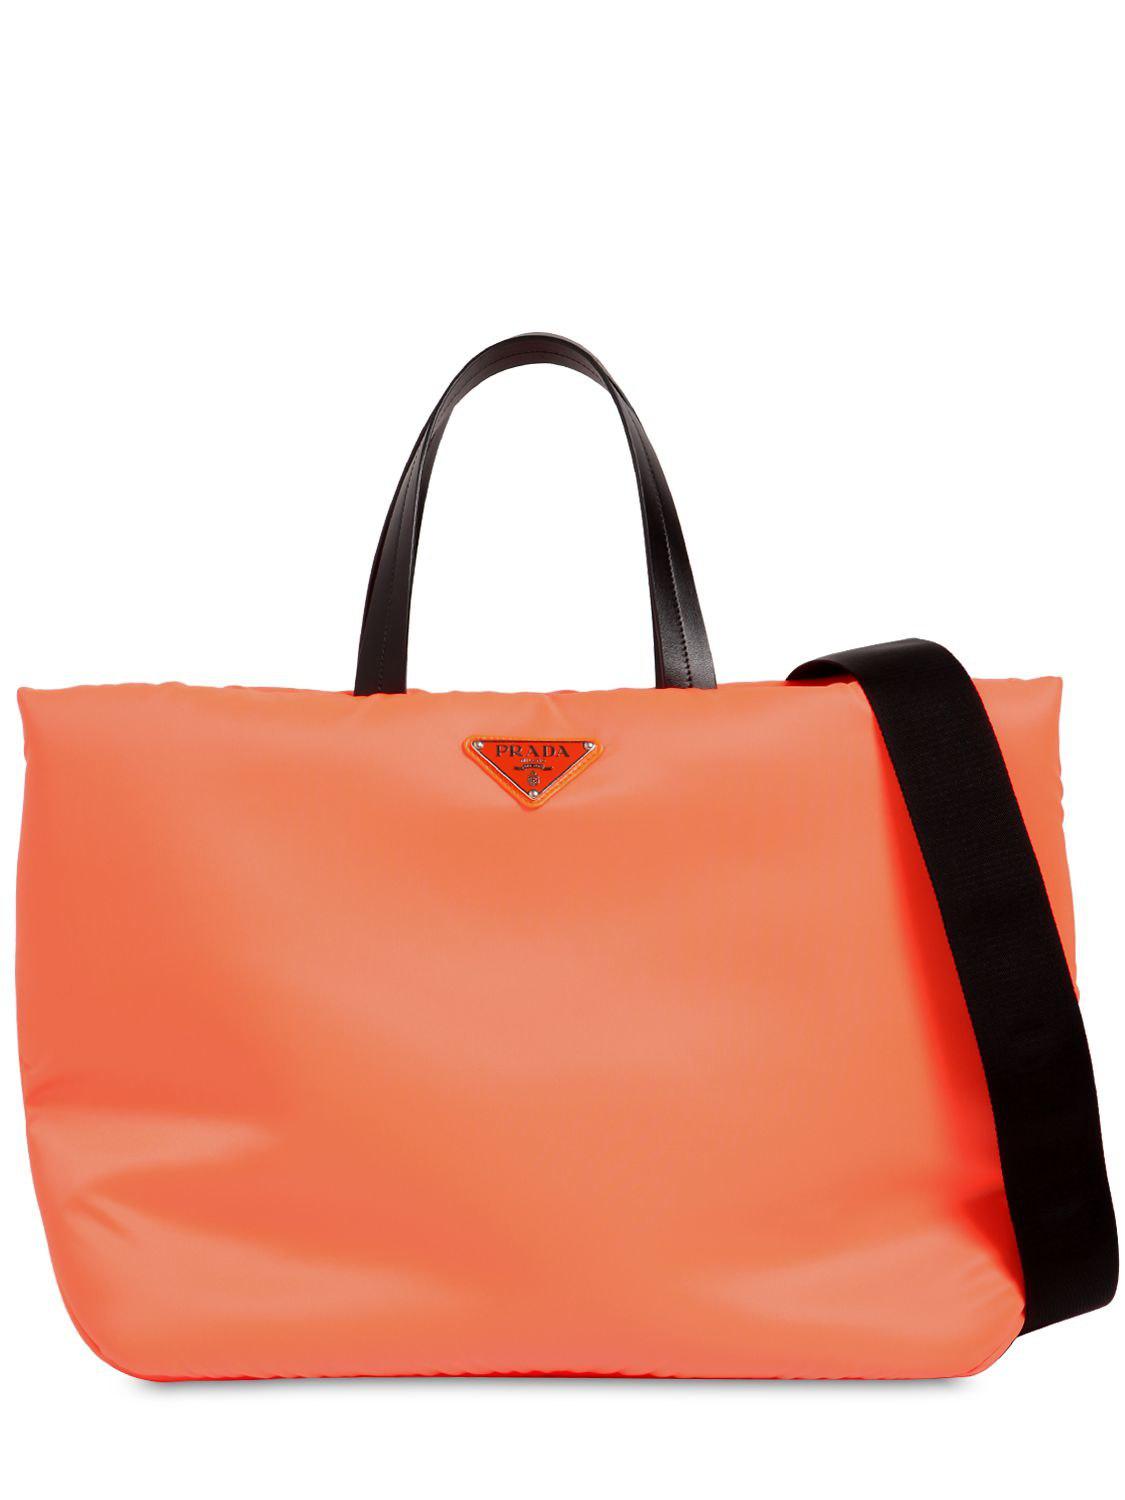 Prada Puffer Nylon Tote Bag in Orange | Lyst